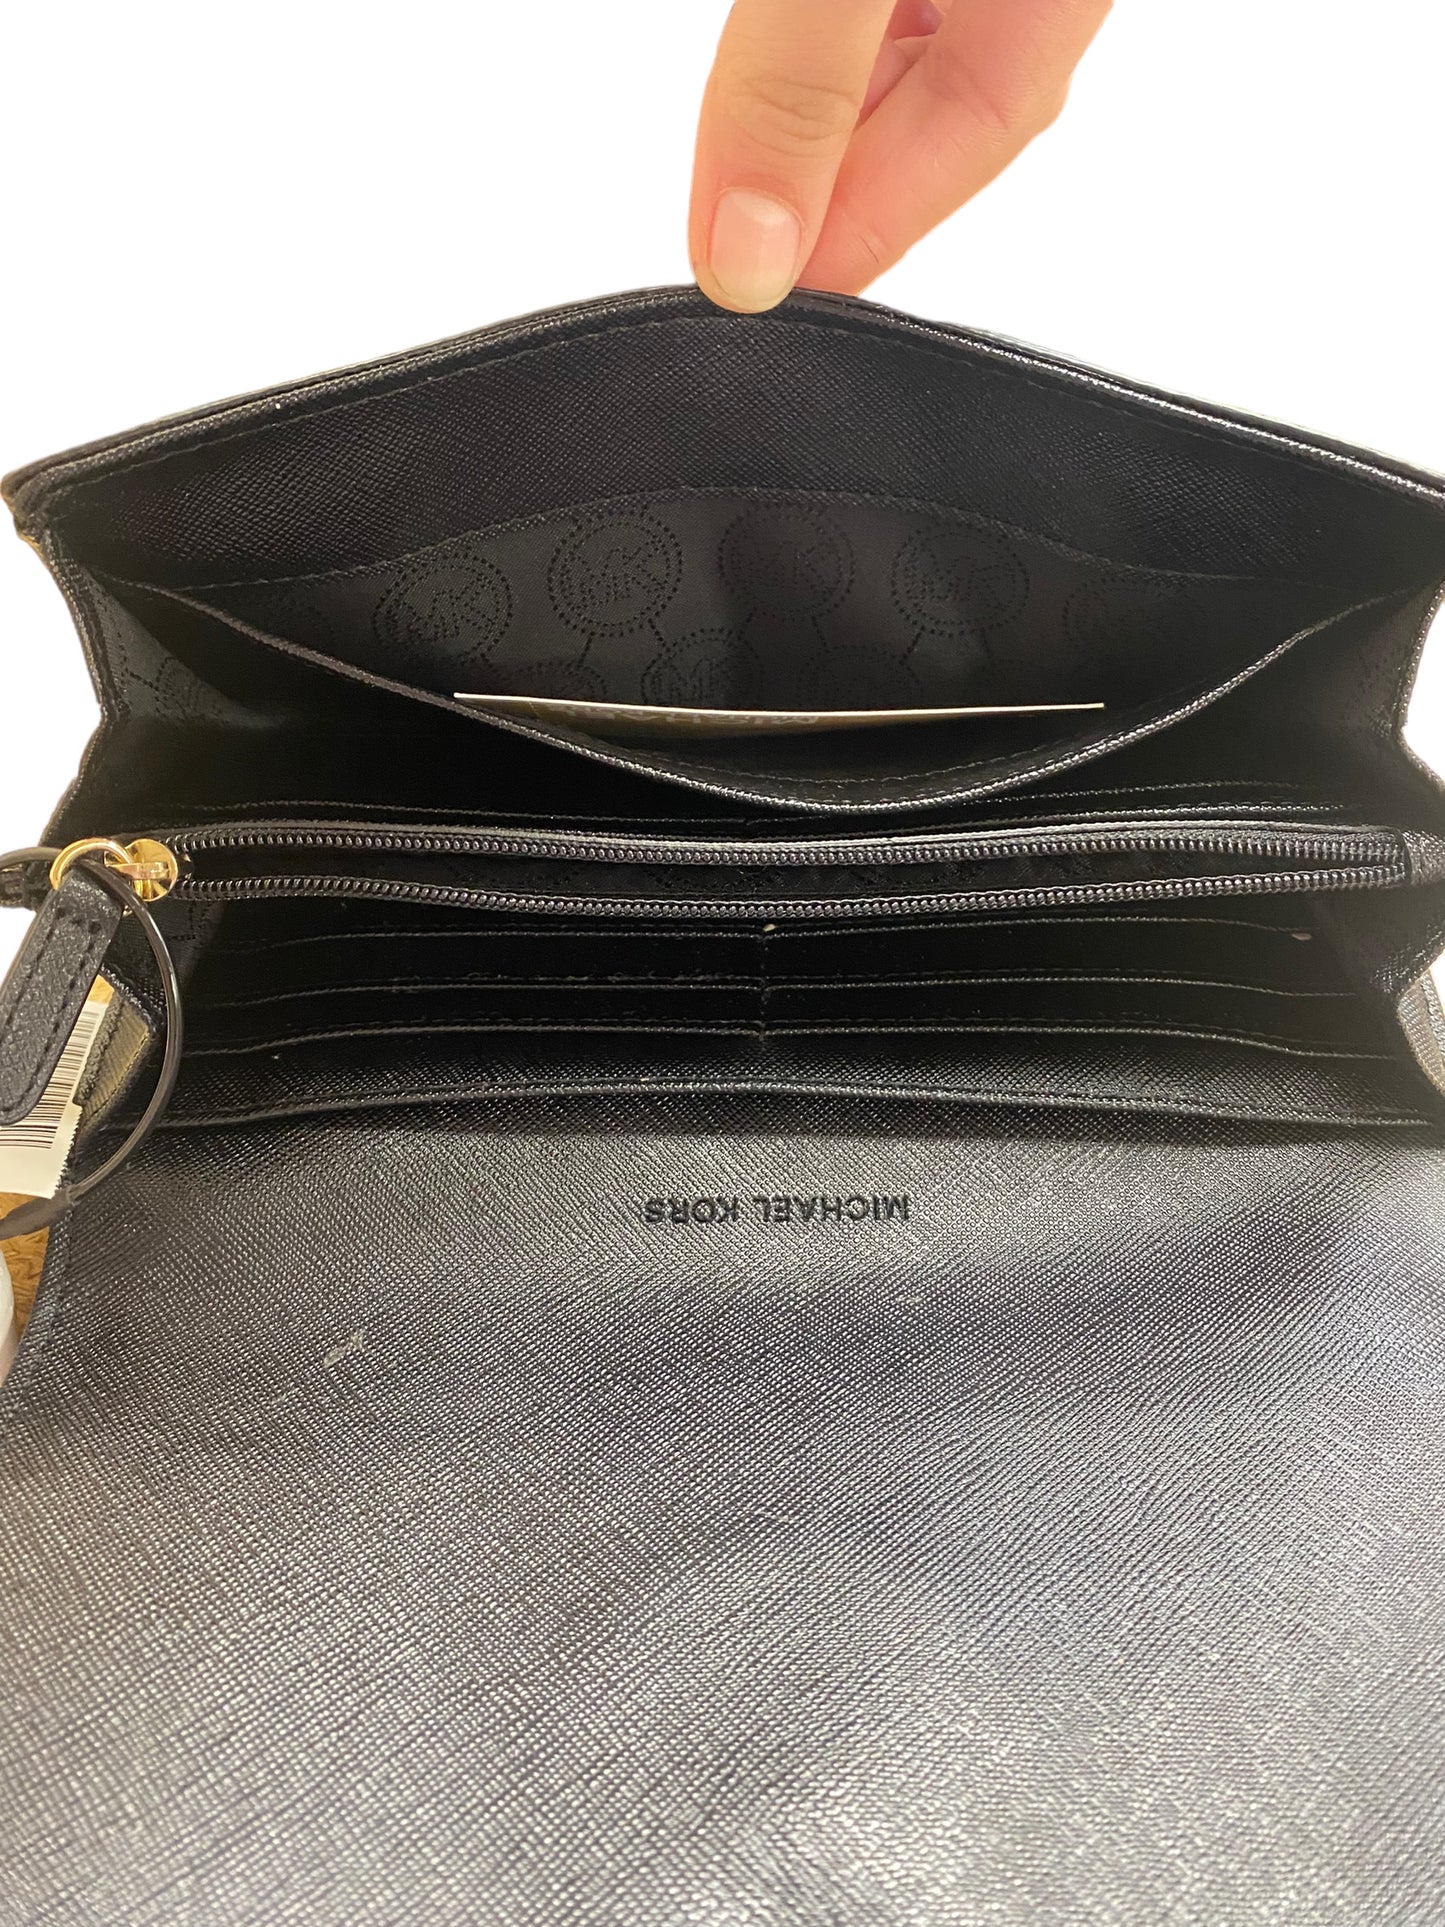 Wallet Designer By Michael By Michael Kors  Size: Medium